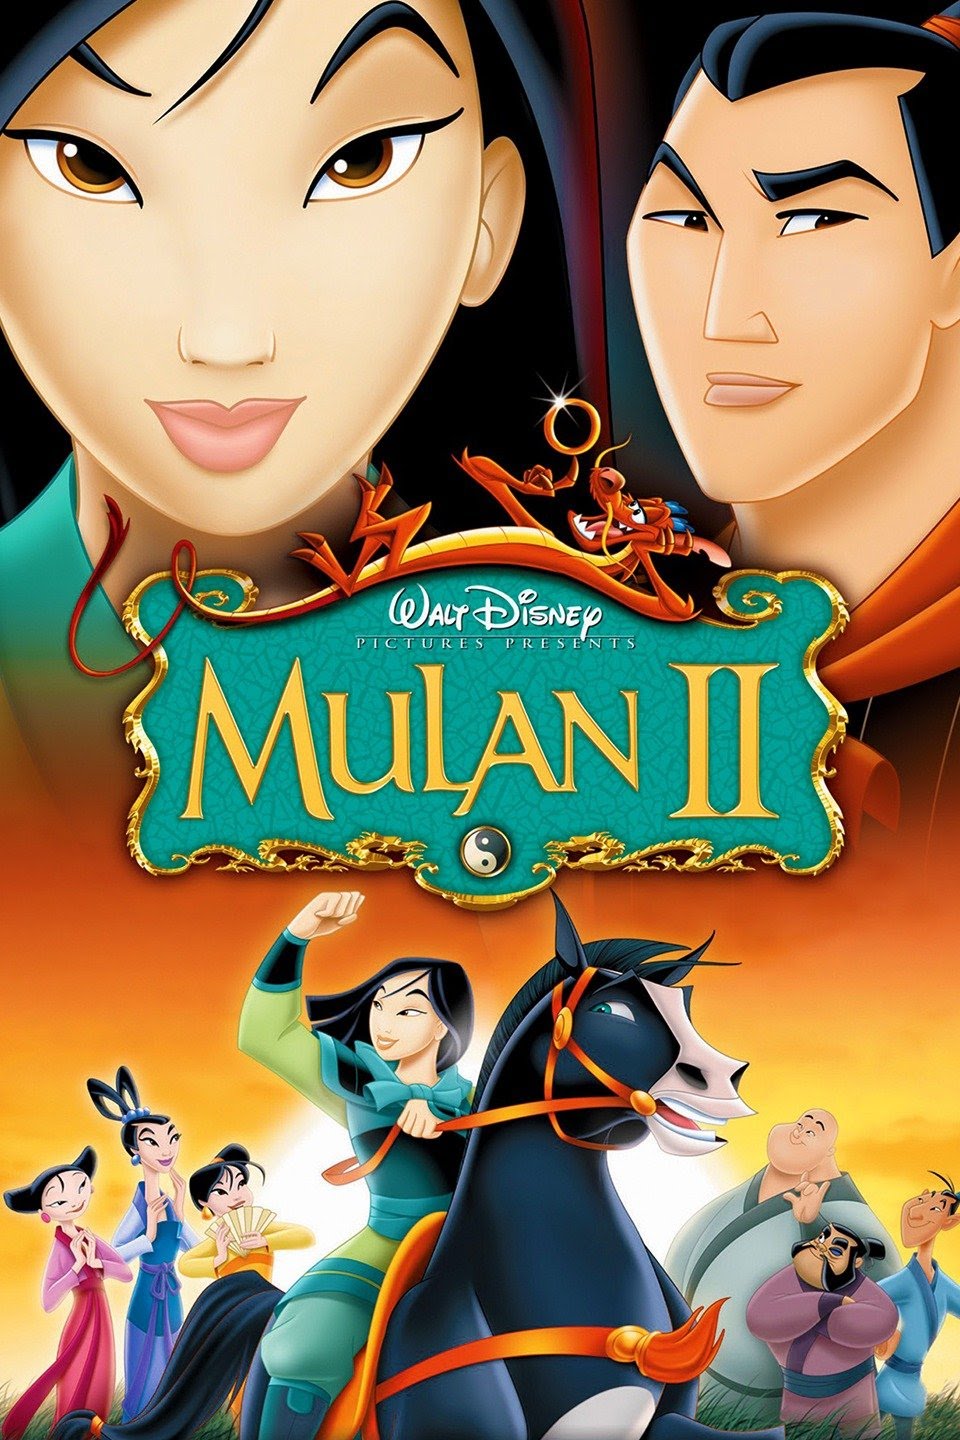 [MINI Super-HQ] Mulan II (2004) มู่หลาน ภาค 2 [1080p] [พากย์ไทย 5.1 + เสียงอังกฤษ 5.1] [บรรยายไทย + อังกฤษ] [เสียงไทย + ซับไทย] [DOSYAUPLOAD]